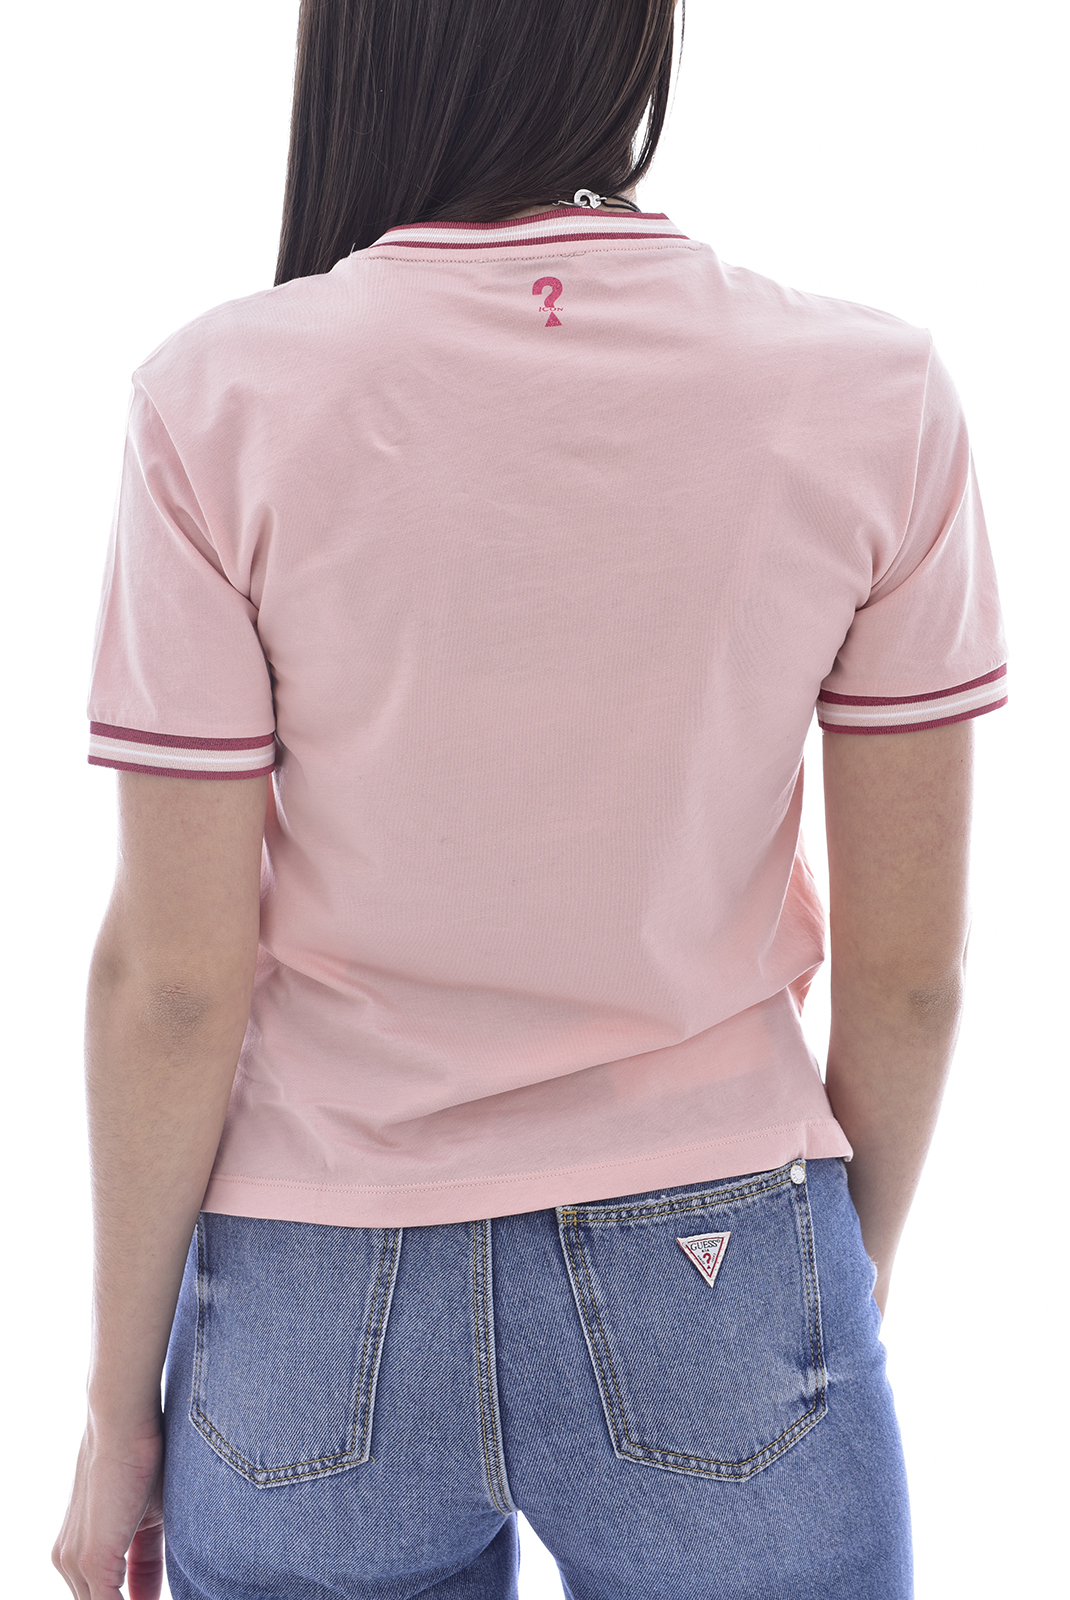 Tee-shirt rose printé strass Guess - W1GI0T 